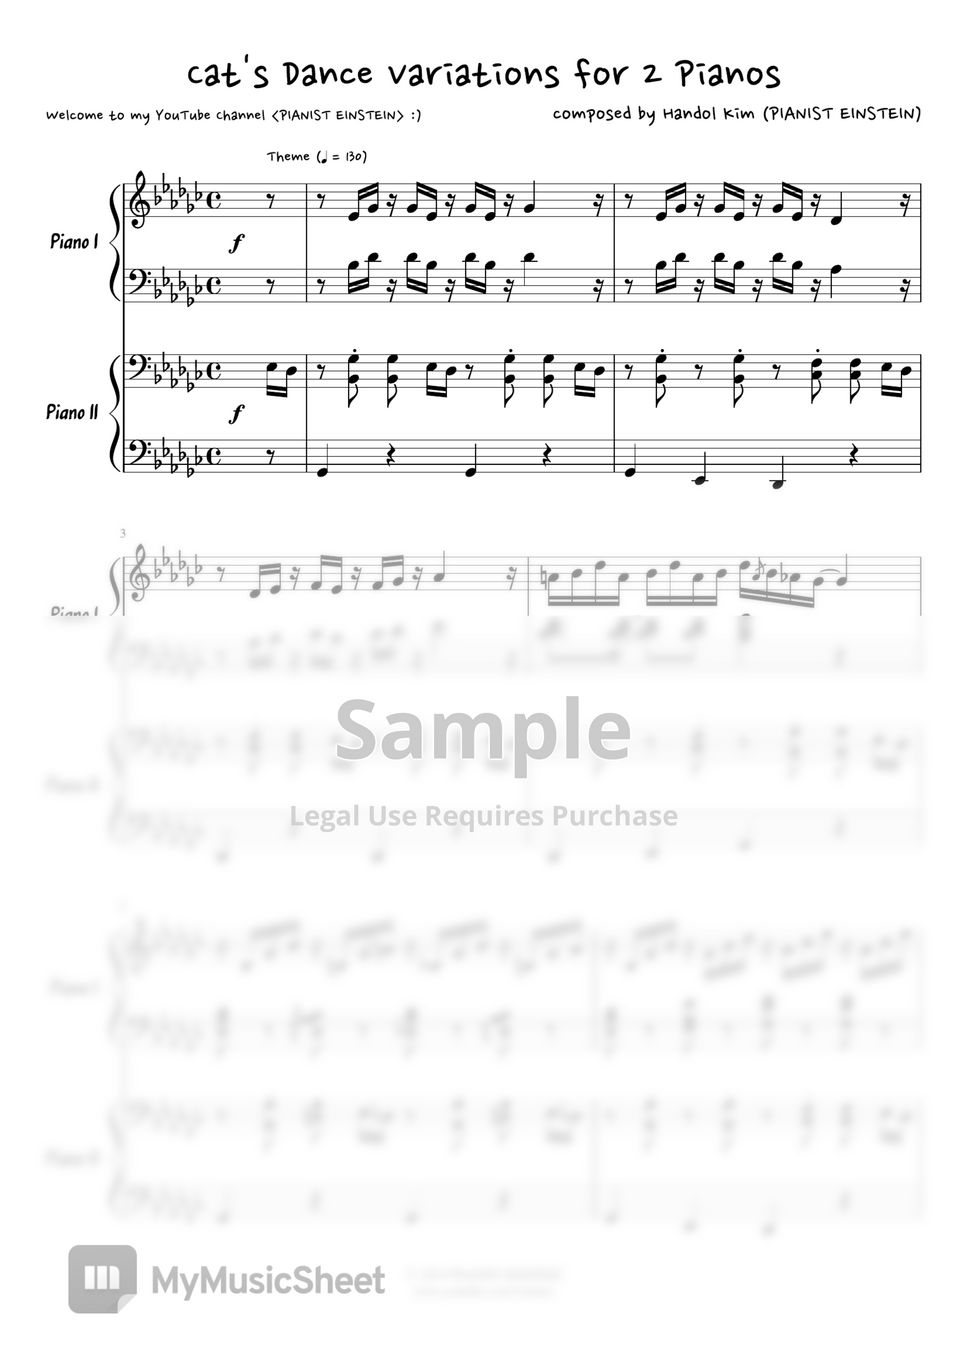 PIANIST EINSTEIN - Variations on Cat's Dance (2 Pianos 4 Hands ver.)